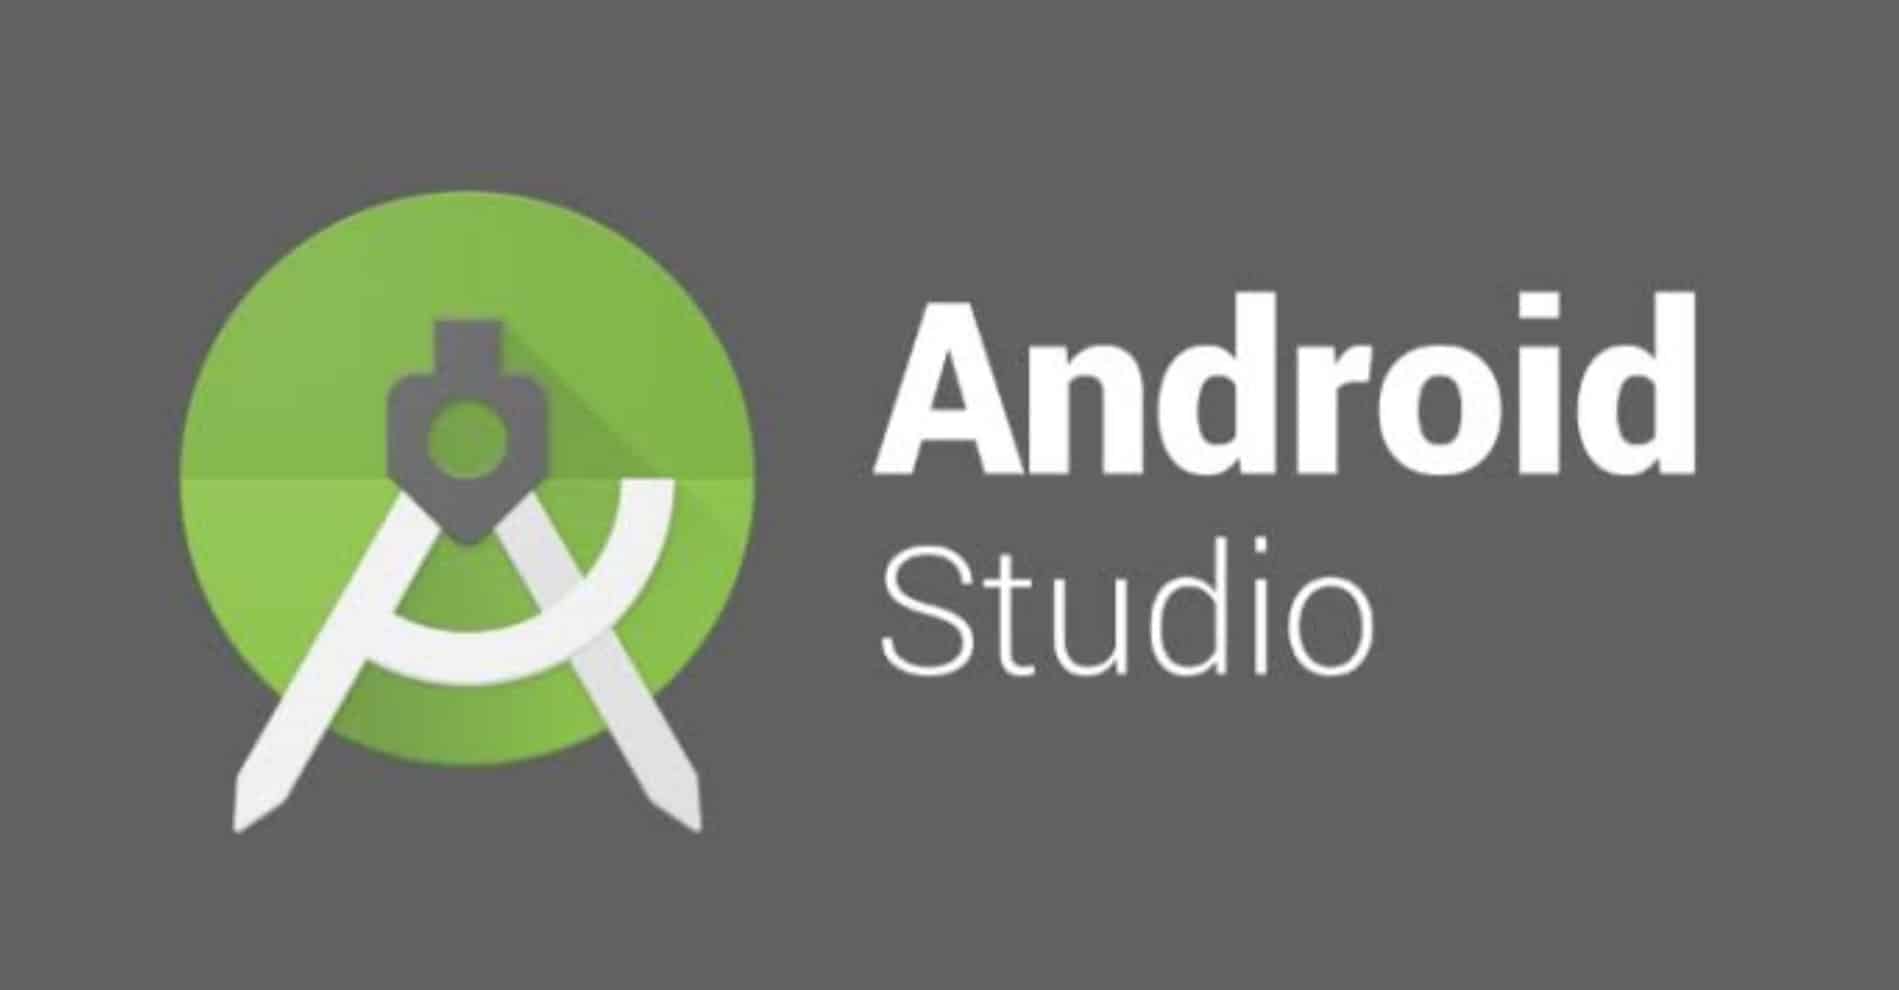 Google Releases Android Studio 4.2 With Latest IntelliJ IDEA, Wizard UI Refresh